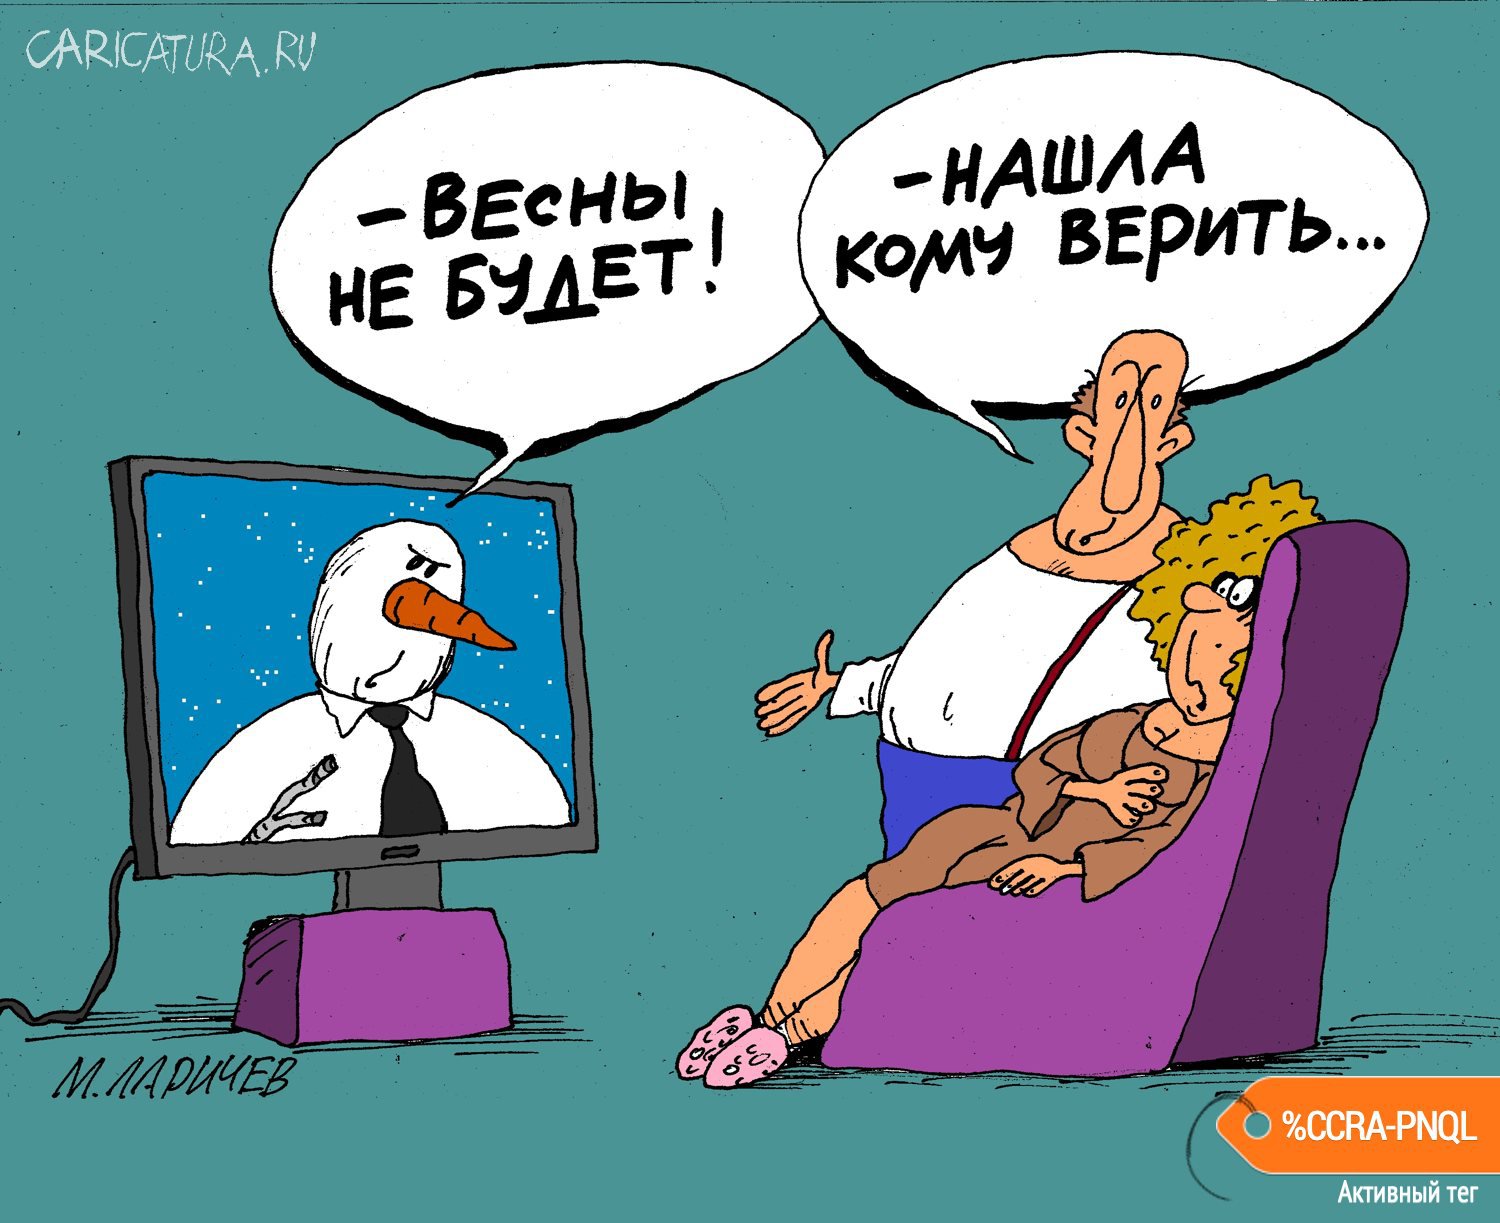 Карикатура "Новости", Михаил Ларичев